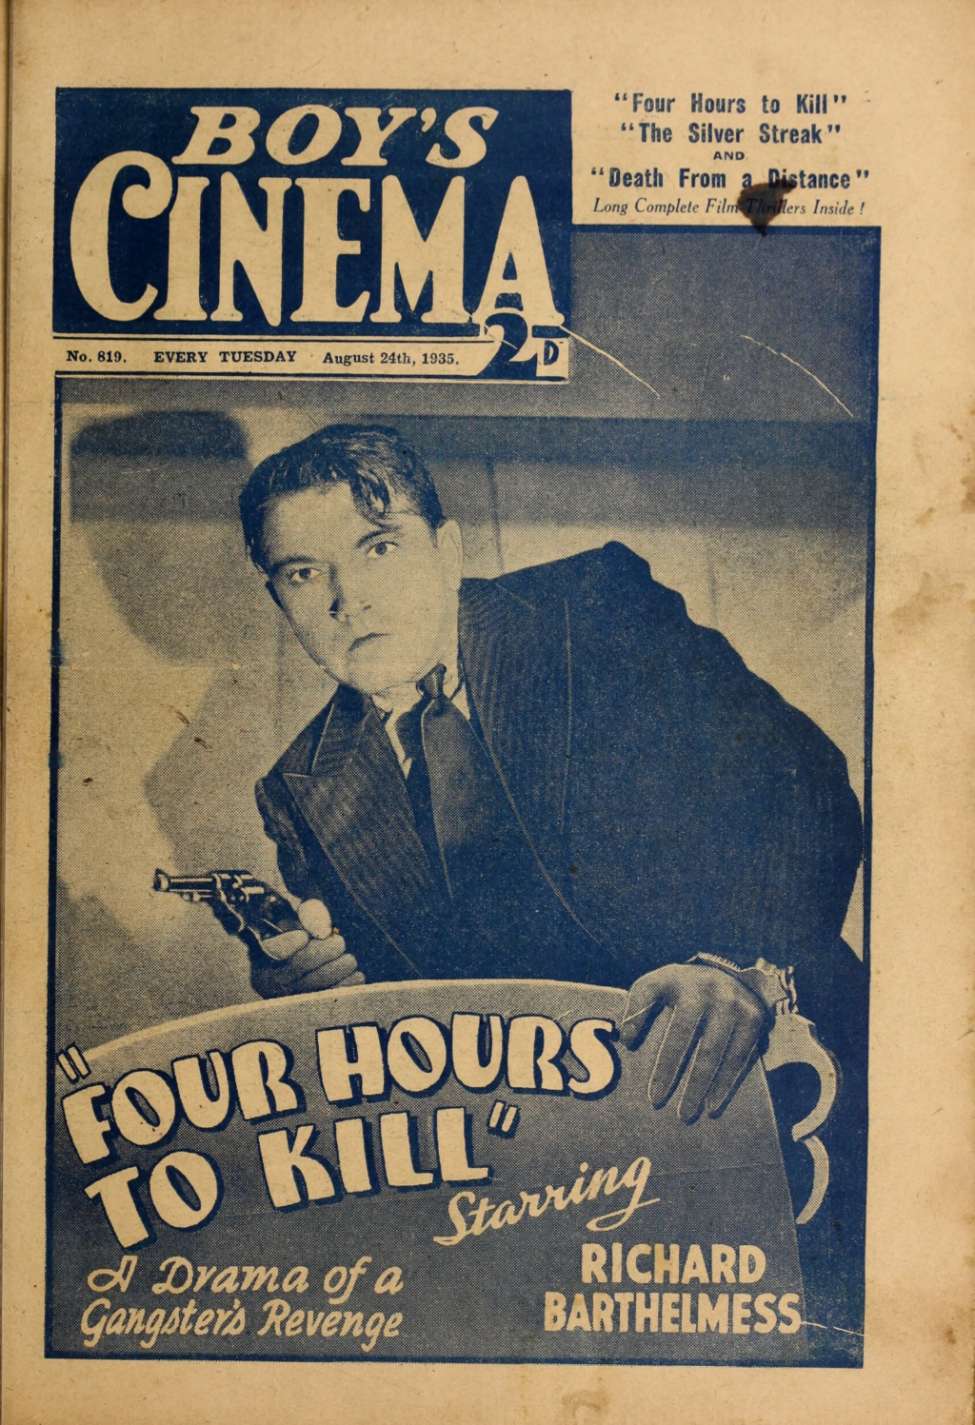 Comic Book Cover For Boy's Cinema 819 - Four Hours to Kill - Richard Barthelmess